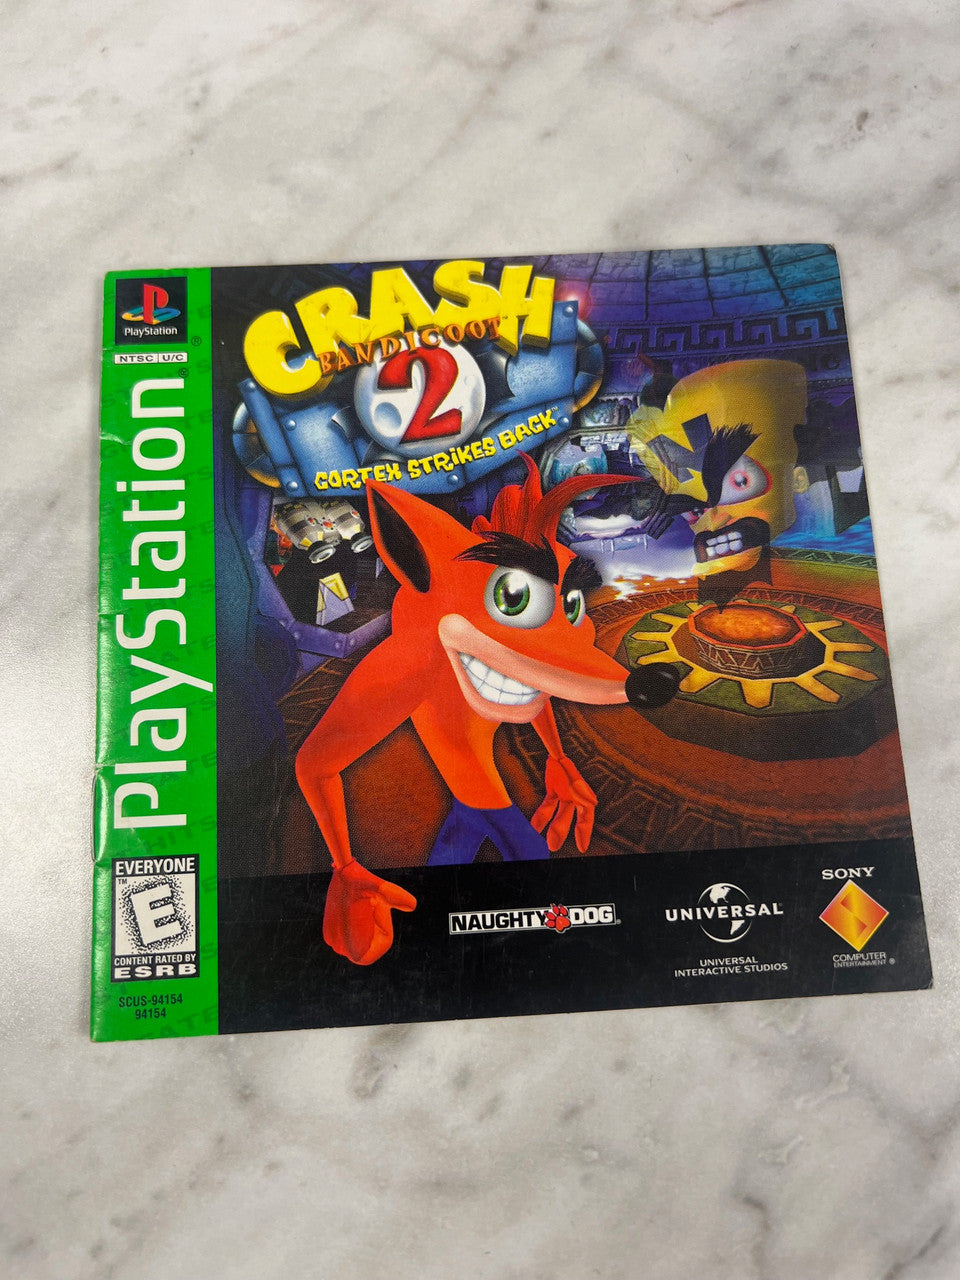 Crash Bandicoot 2 Cortex Strikes Back PS1 Playstation 1 Manual only greatest hits